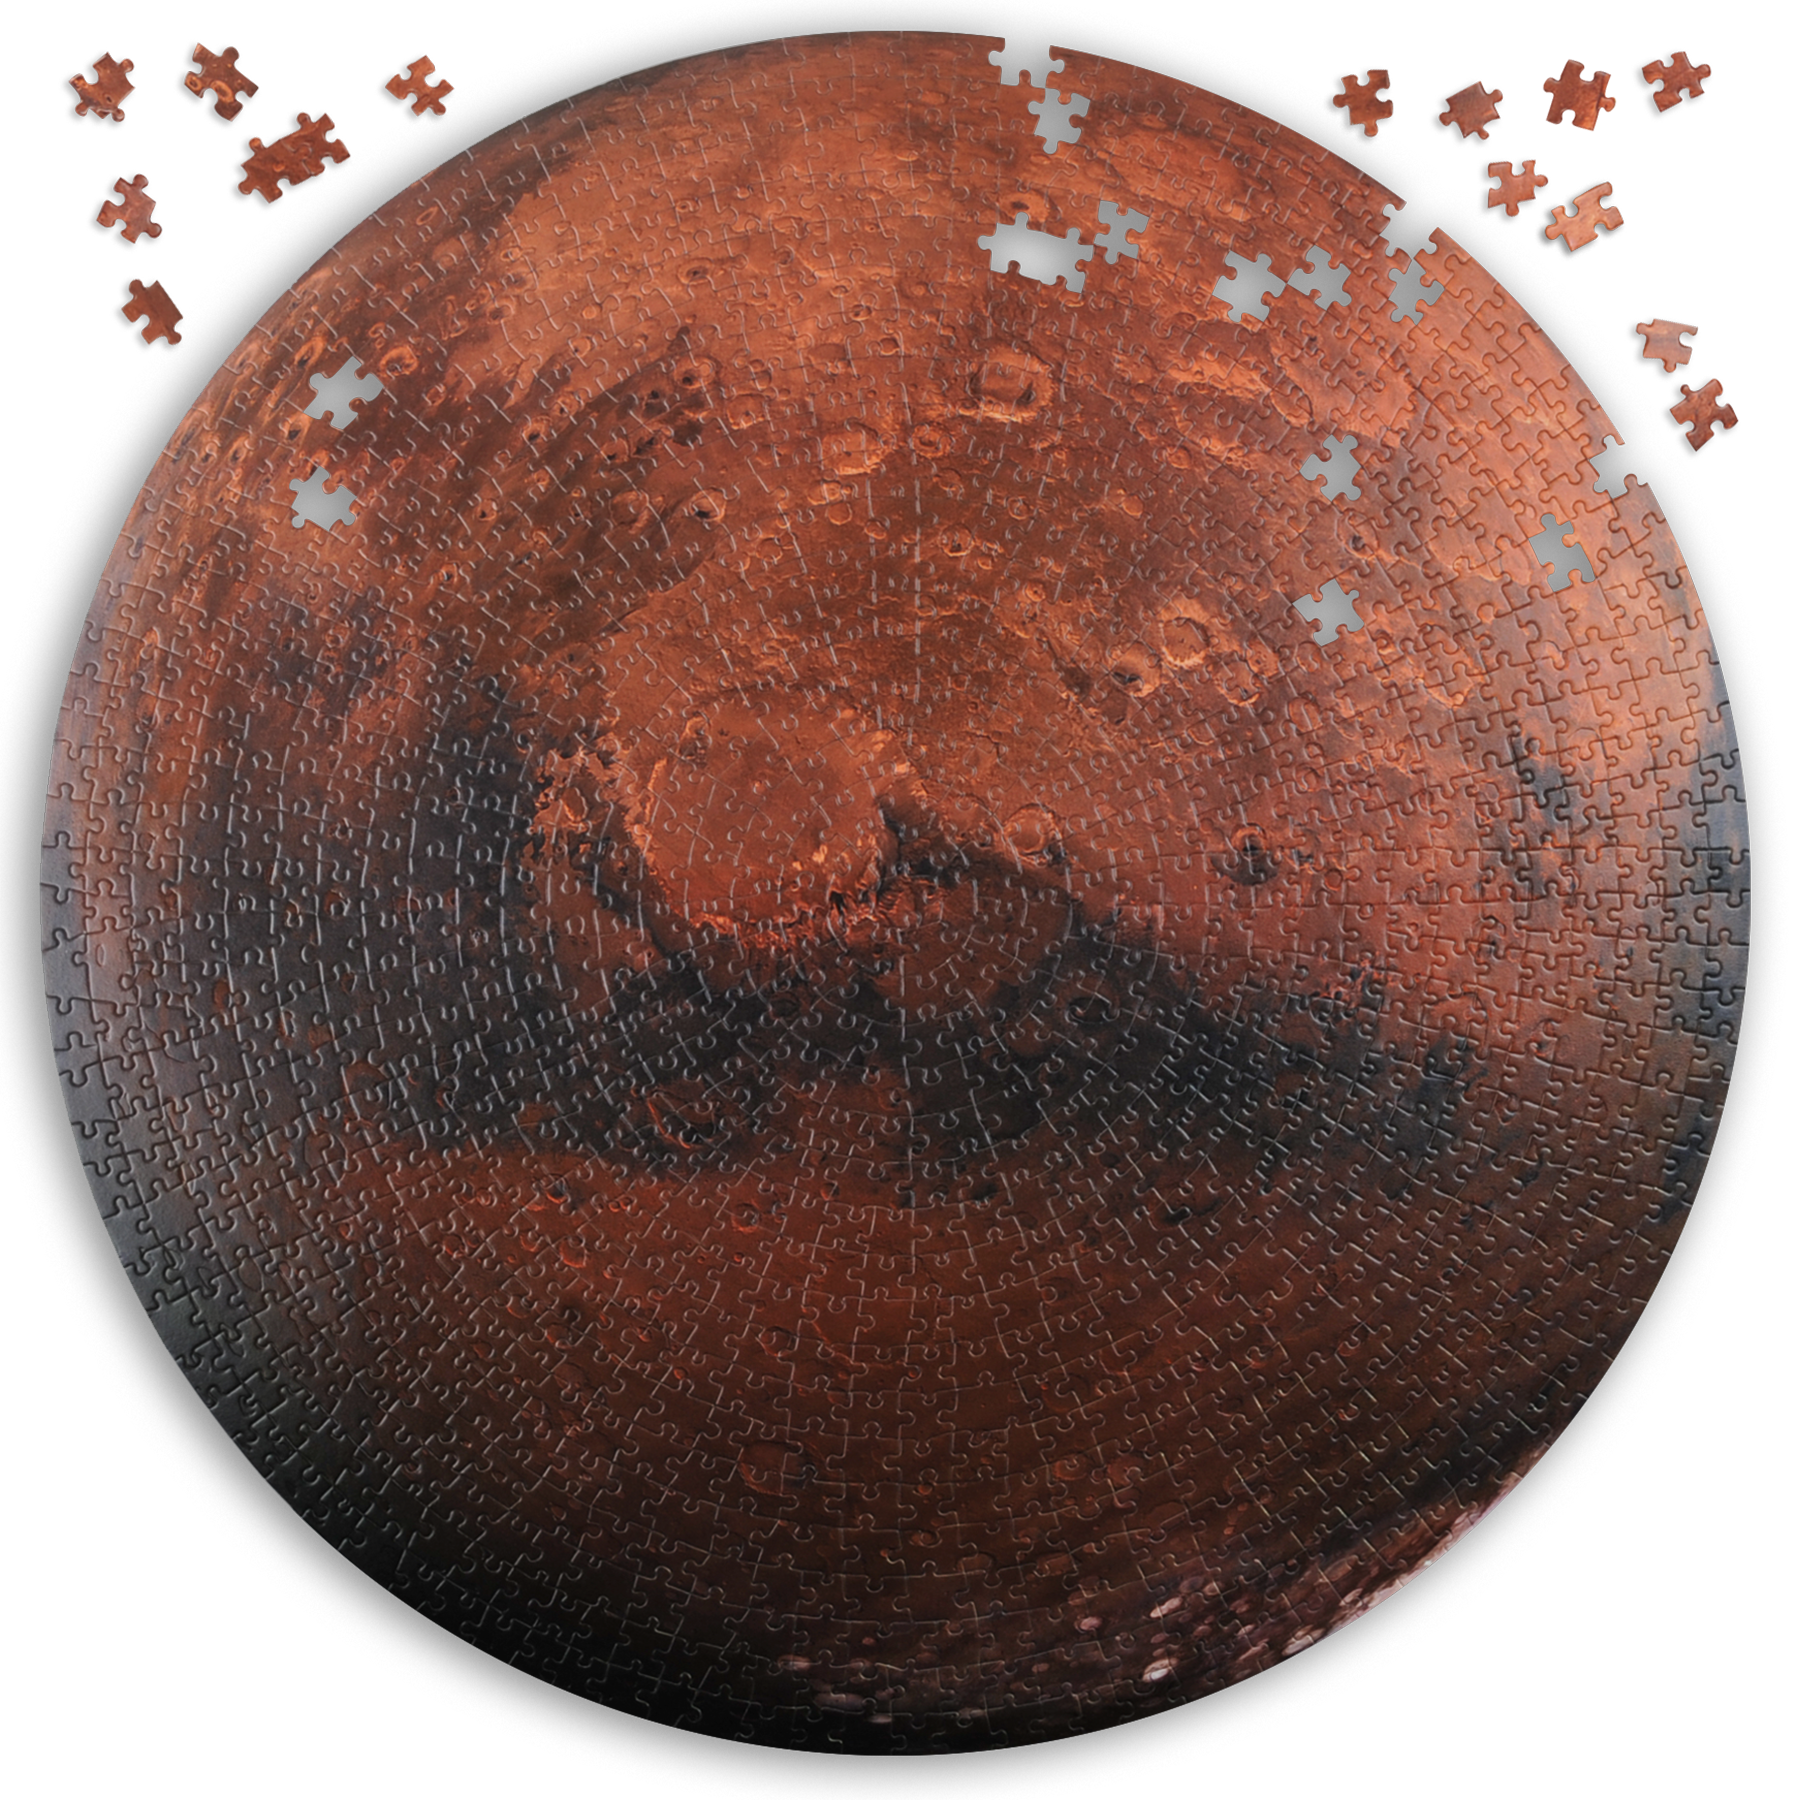 NASA x ANICORN - "Mars Mission" The Mars Puzzle